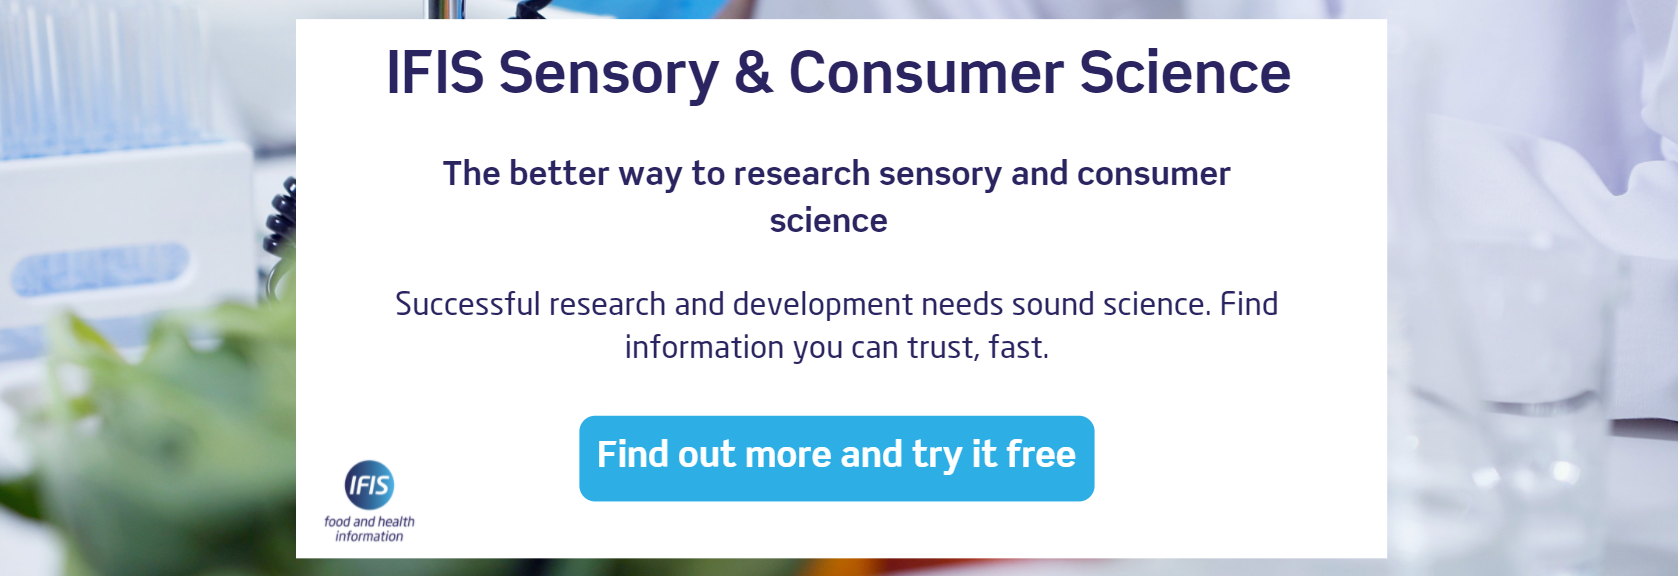 IFIS Sensory and Consumer science CTA